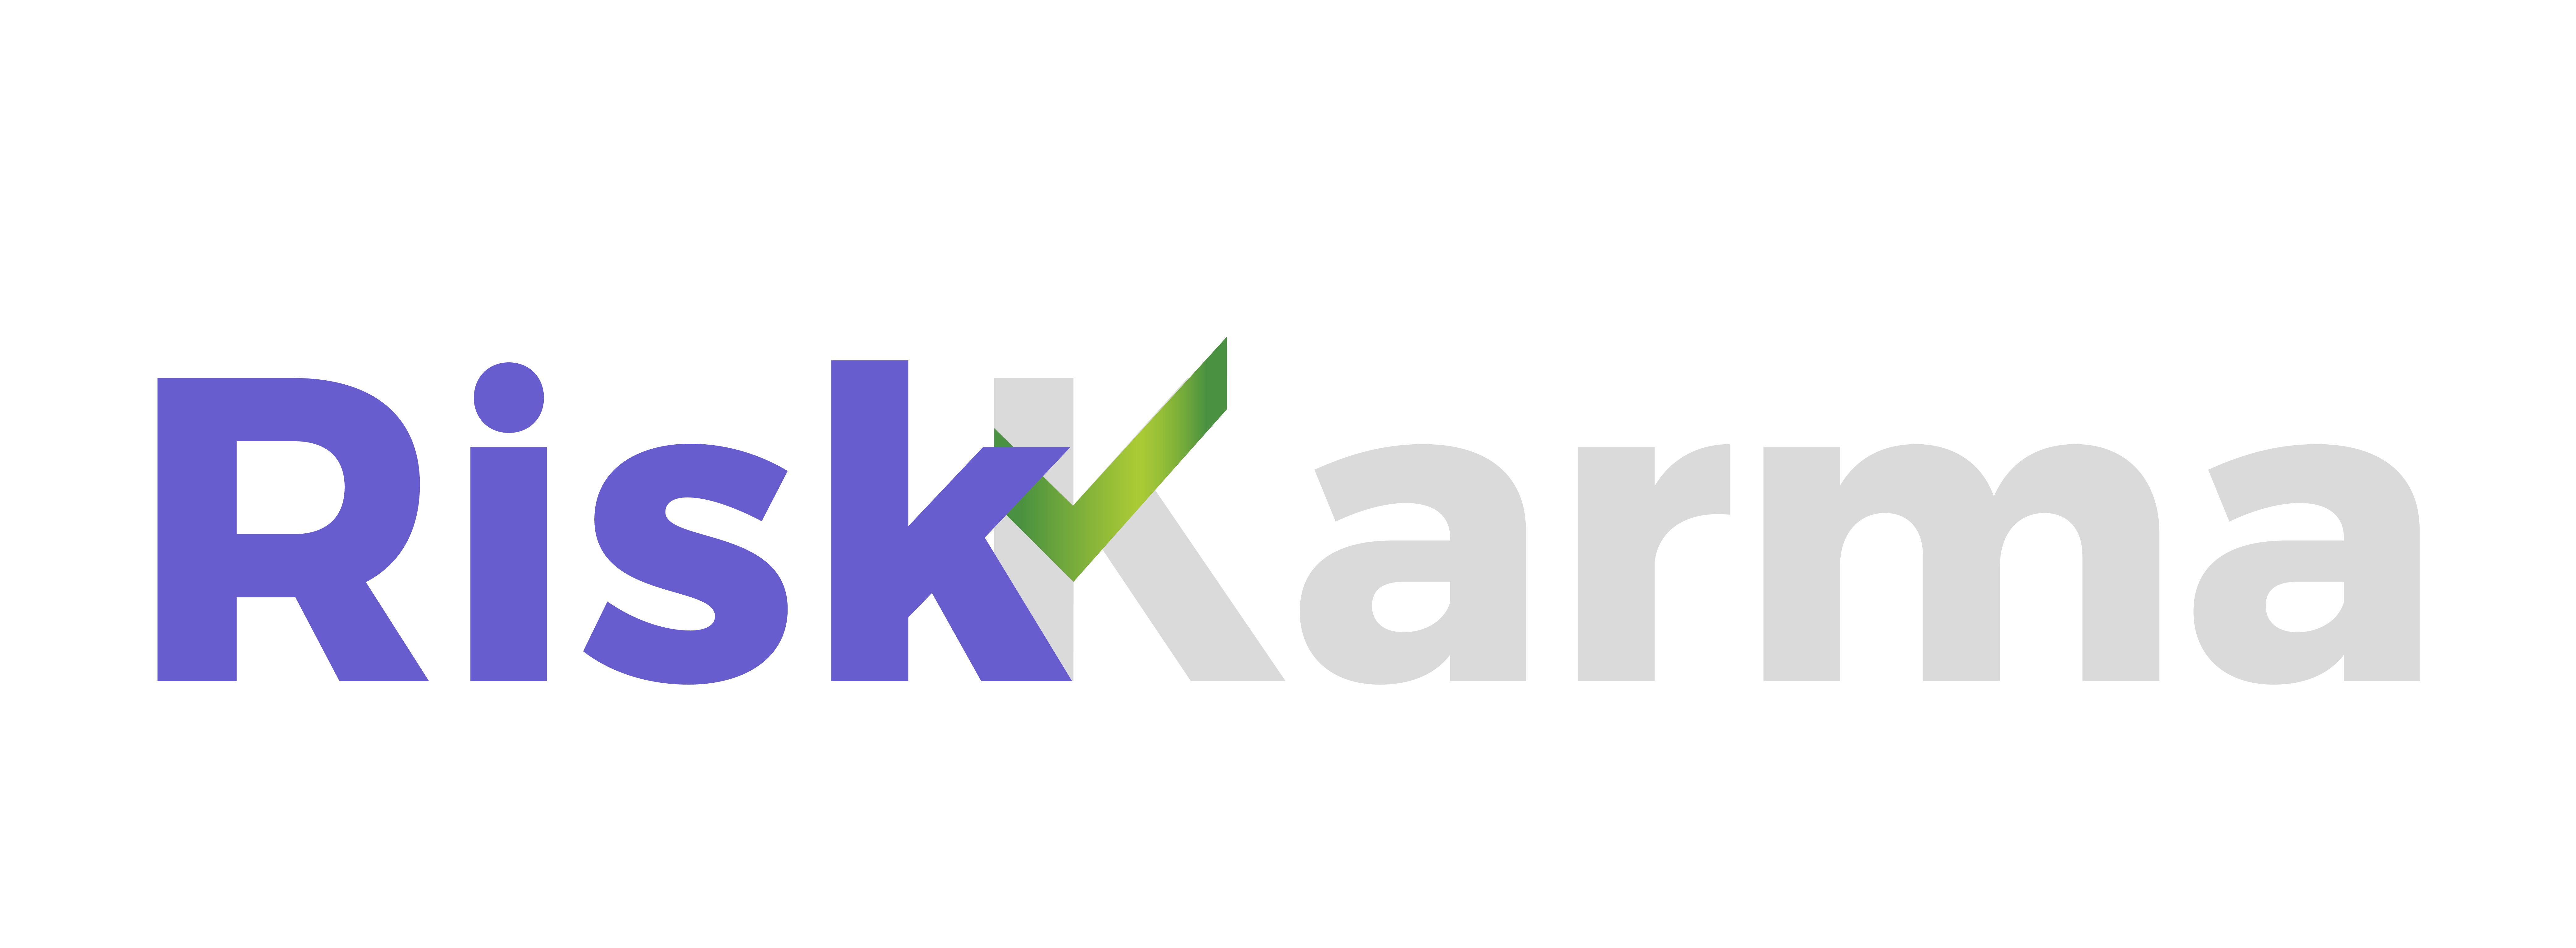 RiskKarma.io Announces Partnership with Quaeris for Next Generation Risk Management